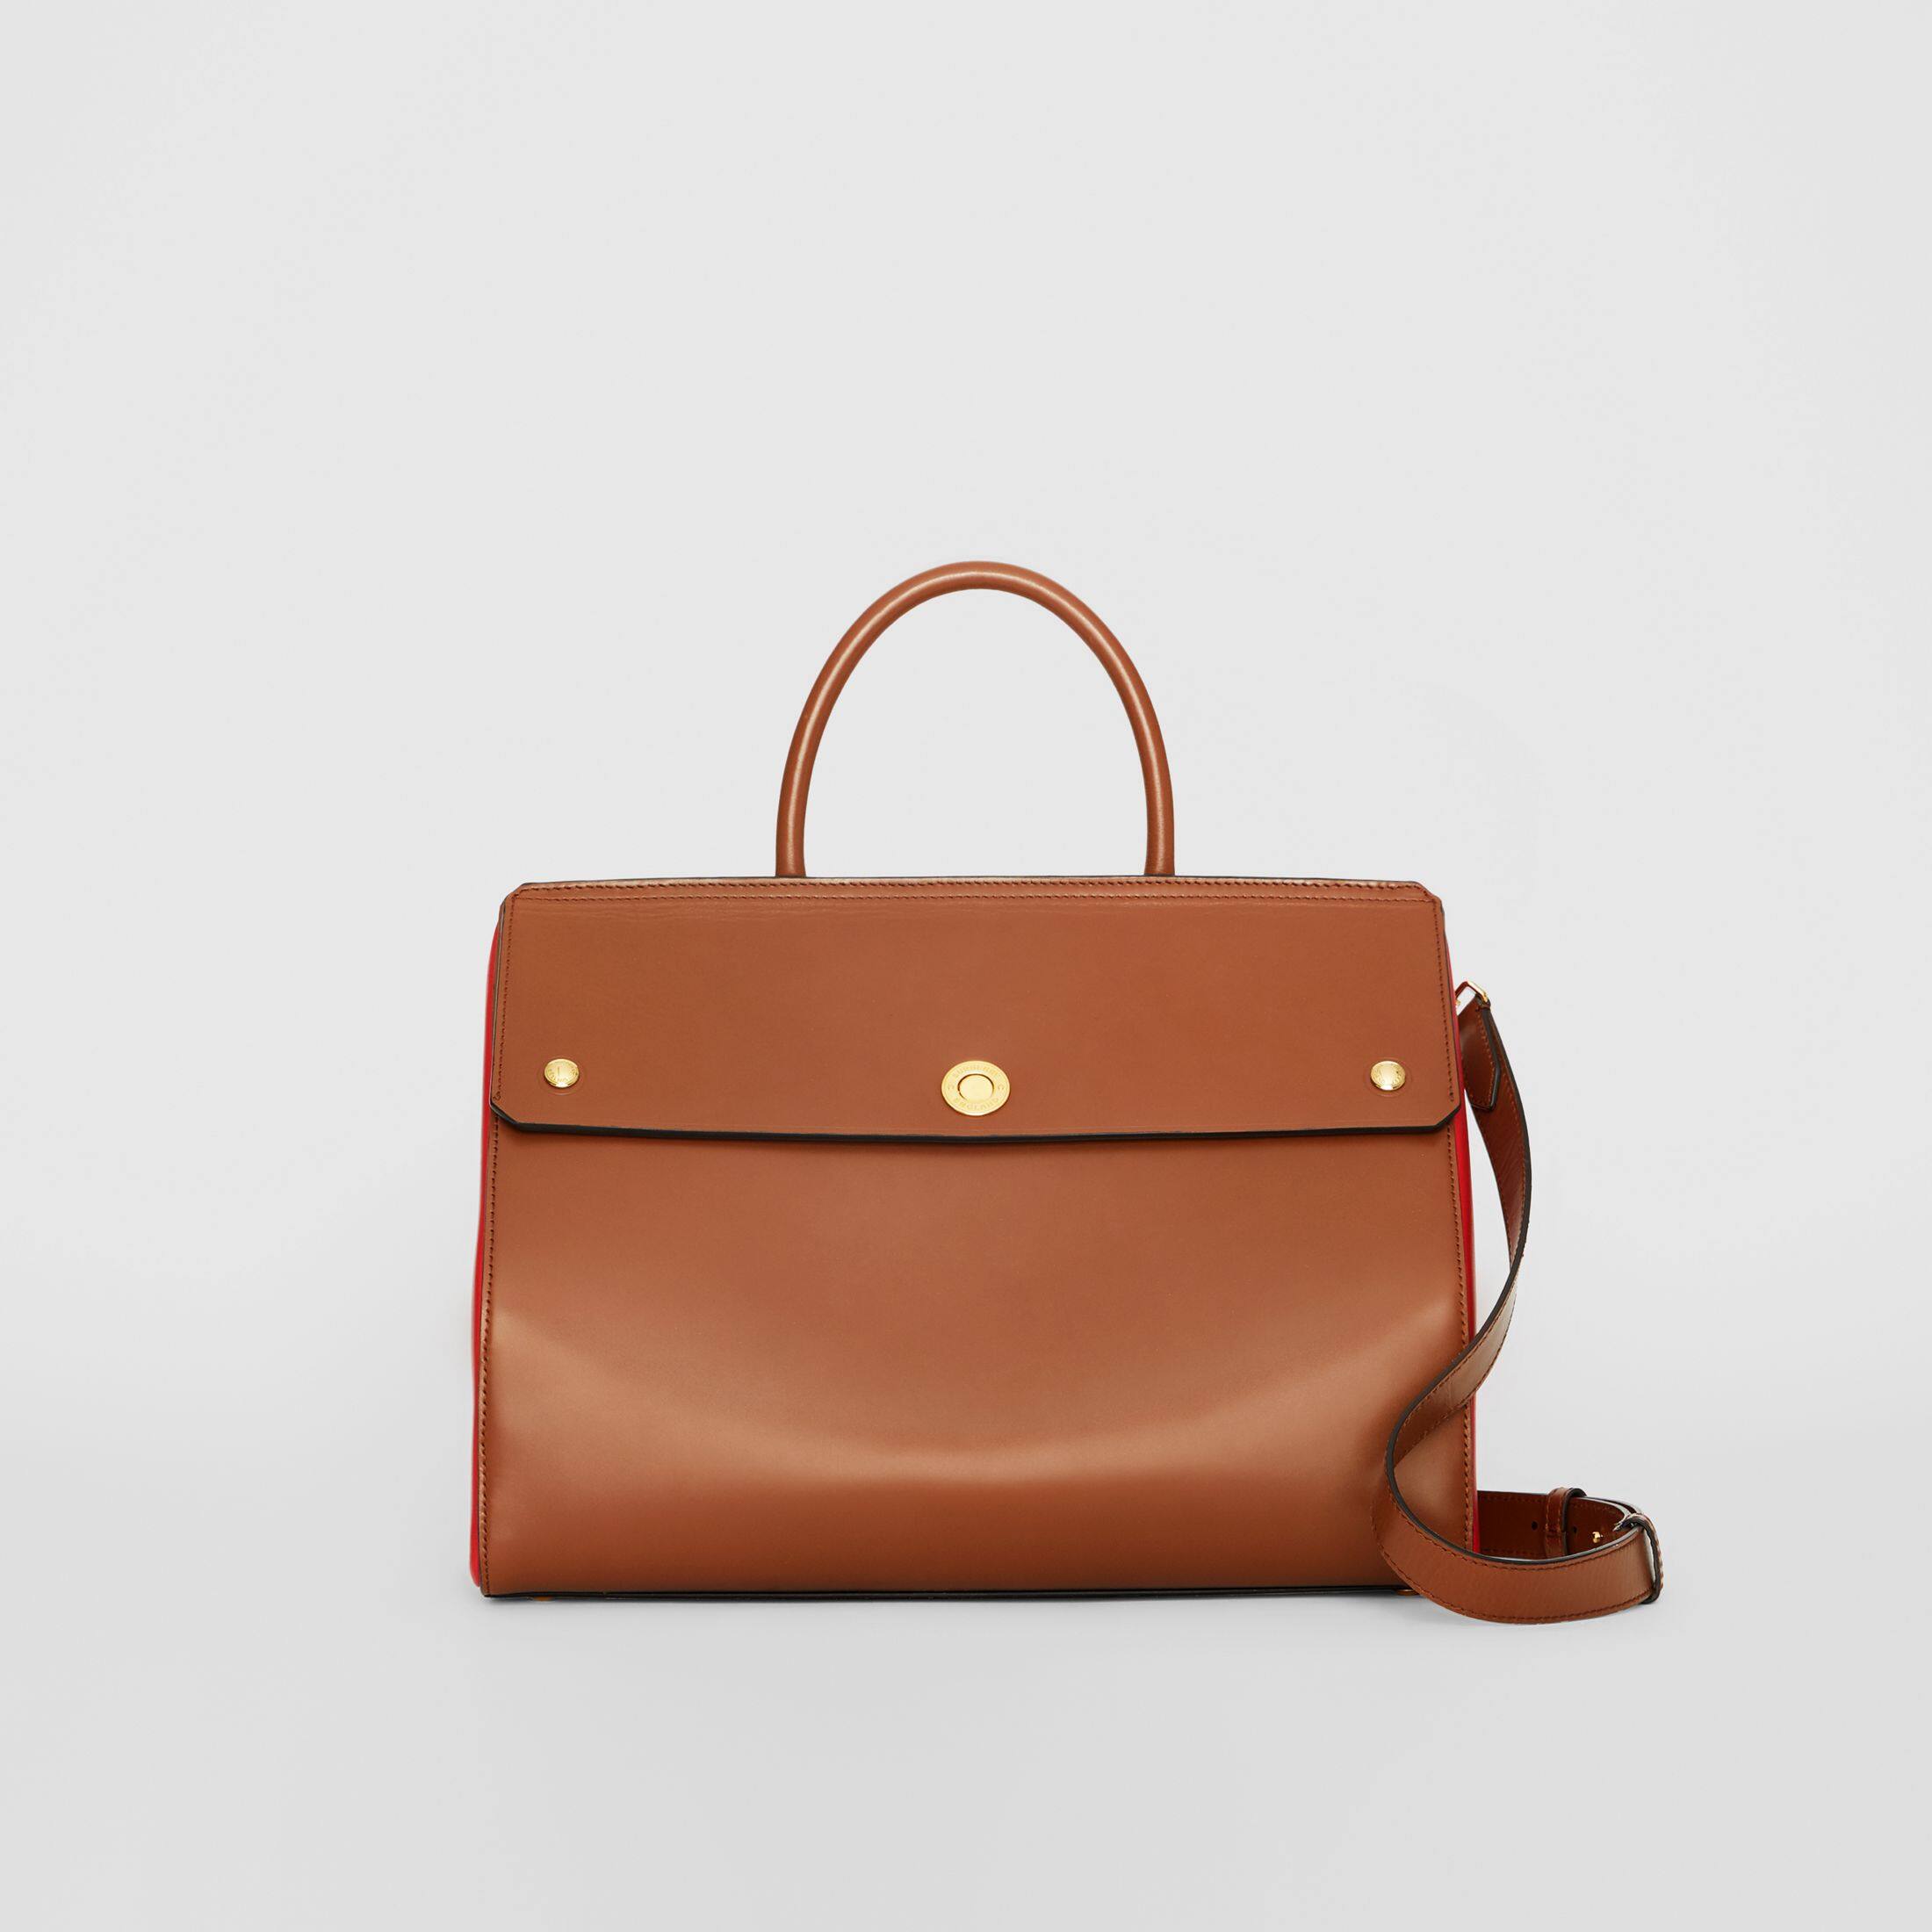 Burberry這款著重結構性的包包，採用棱角分明的輪廓，飾有雙色皮革，以啡色配